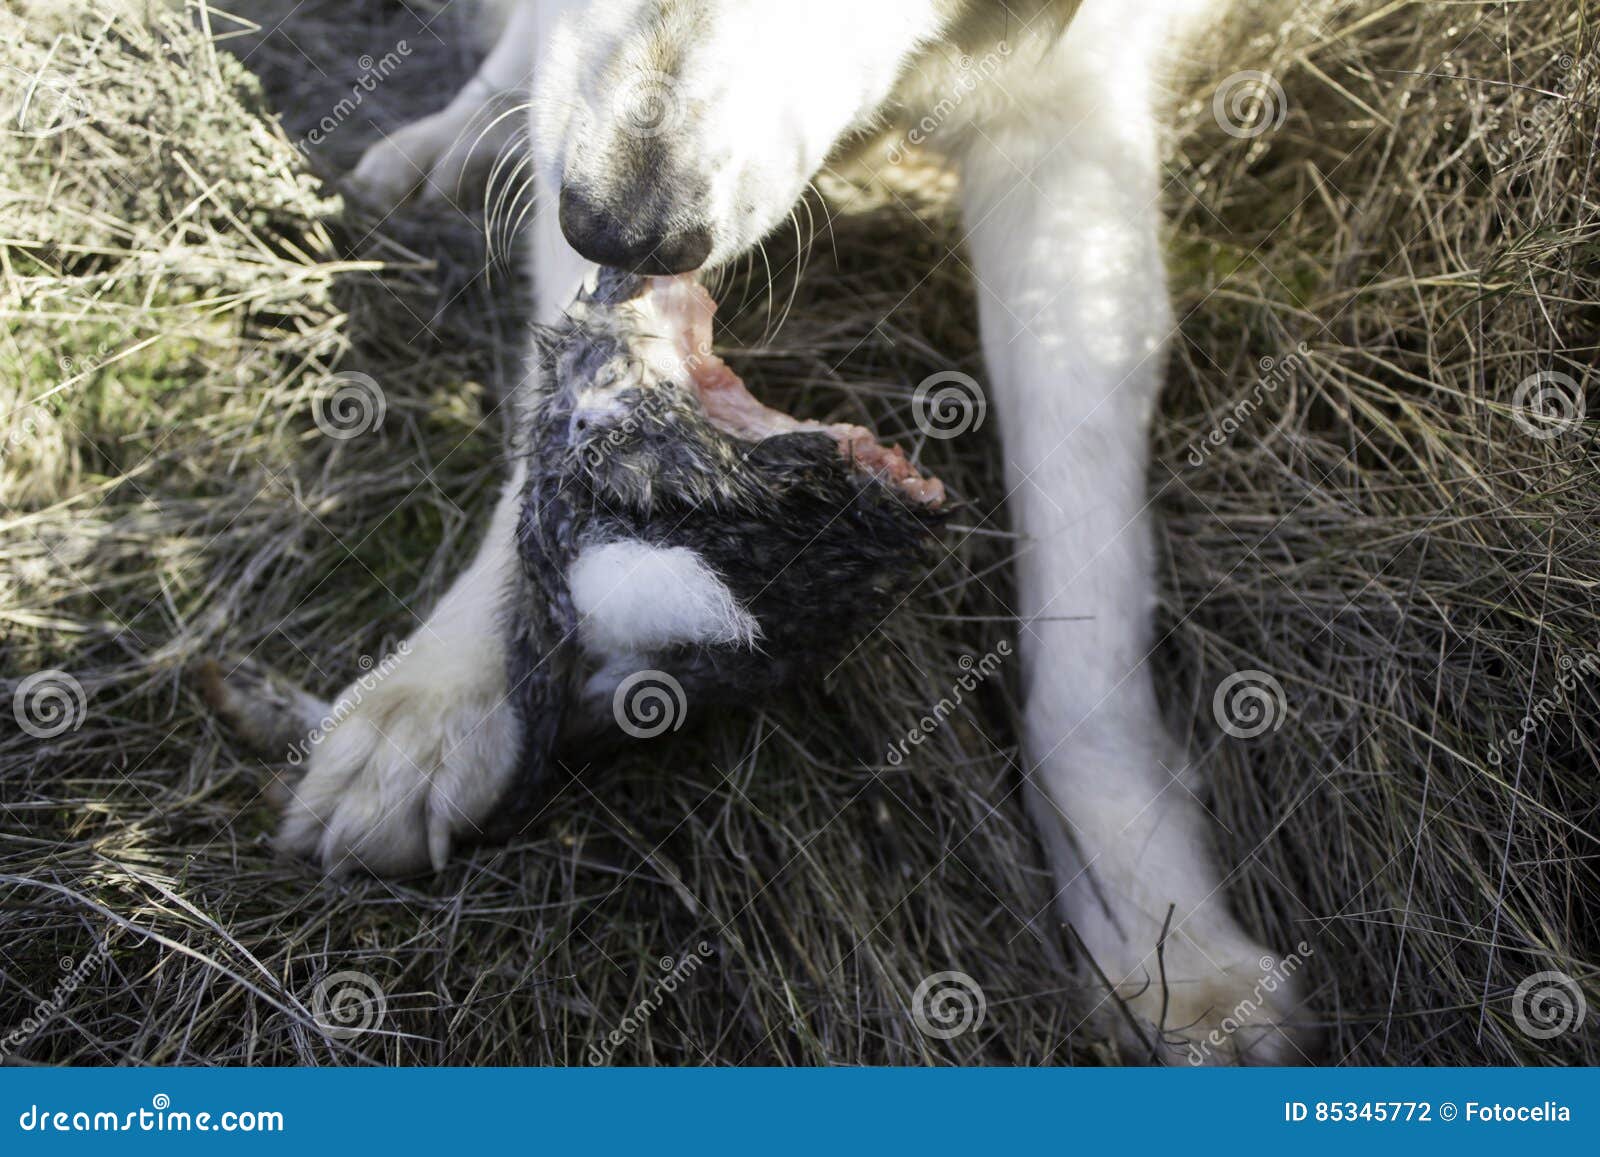 rødme ballon Melting Hund gejagtes Kaninchen stockfoto. Bild von jagd, hunde - 85345772